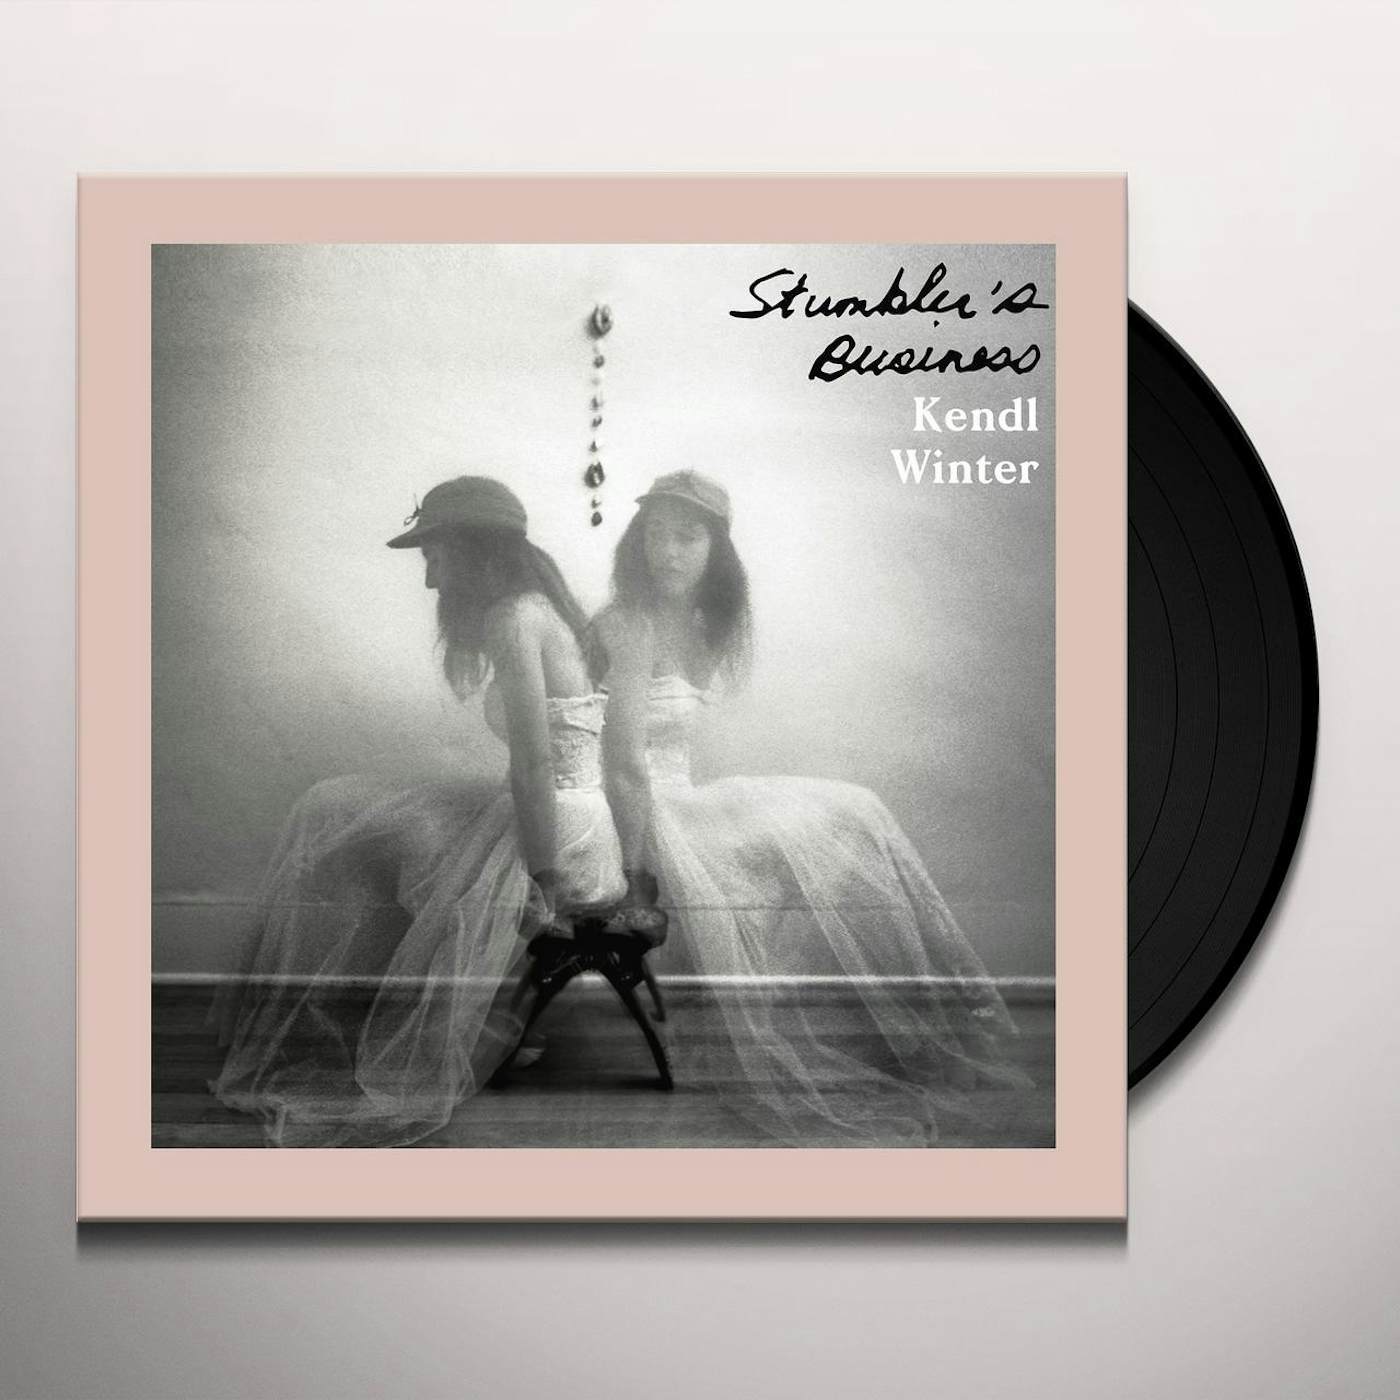 Kendl Winter Stumbler's Business Vinyl Record